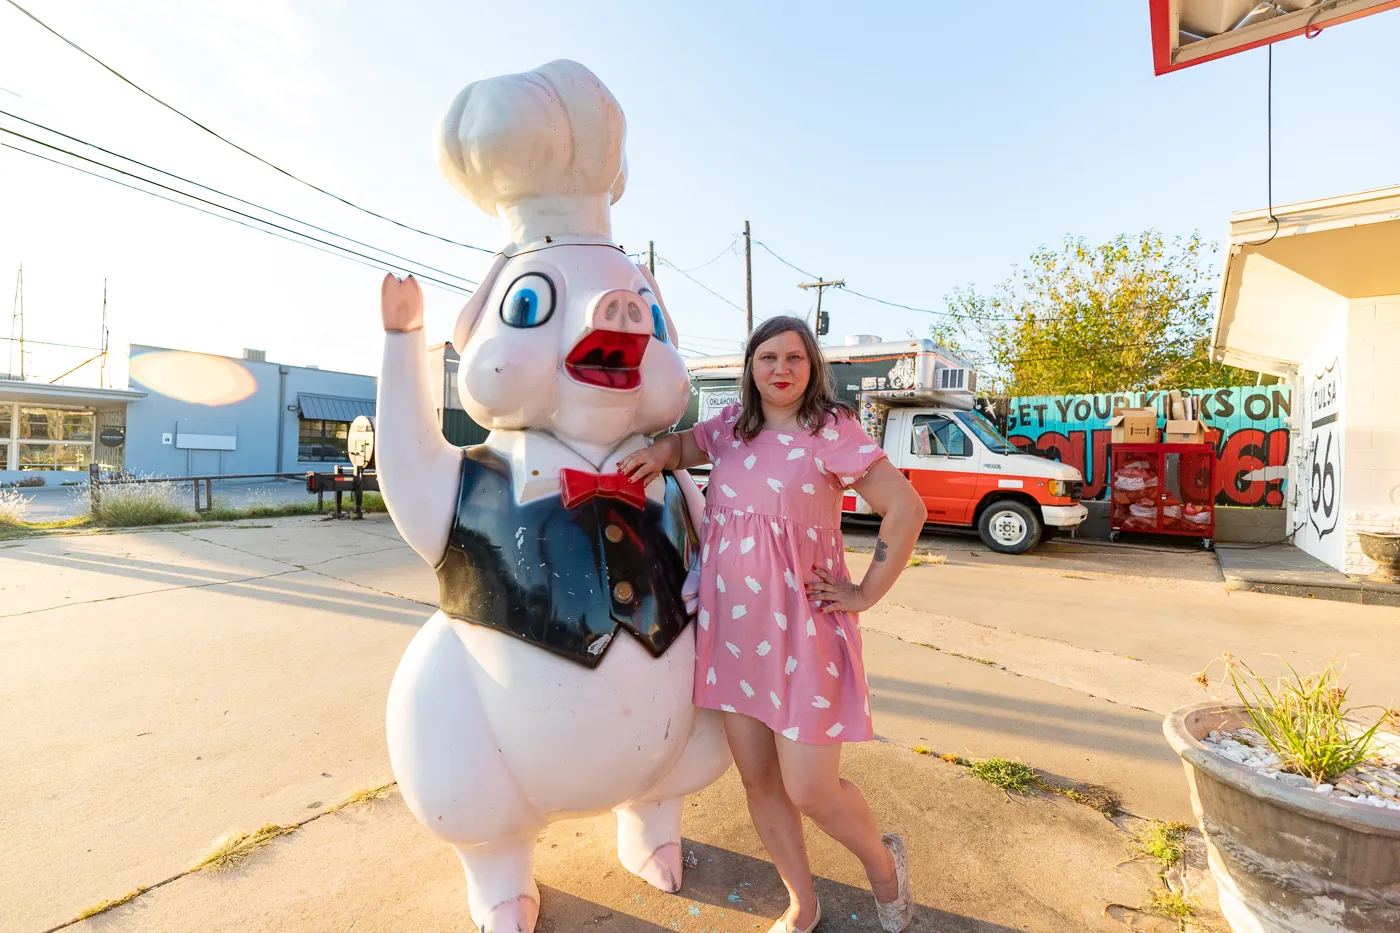 Piggy stardust fiberglass chef pig at Buck Atom's Cosmic Curios on Route 66 in Tulsa, Oklahoma